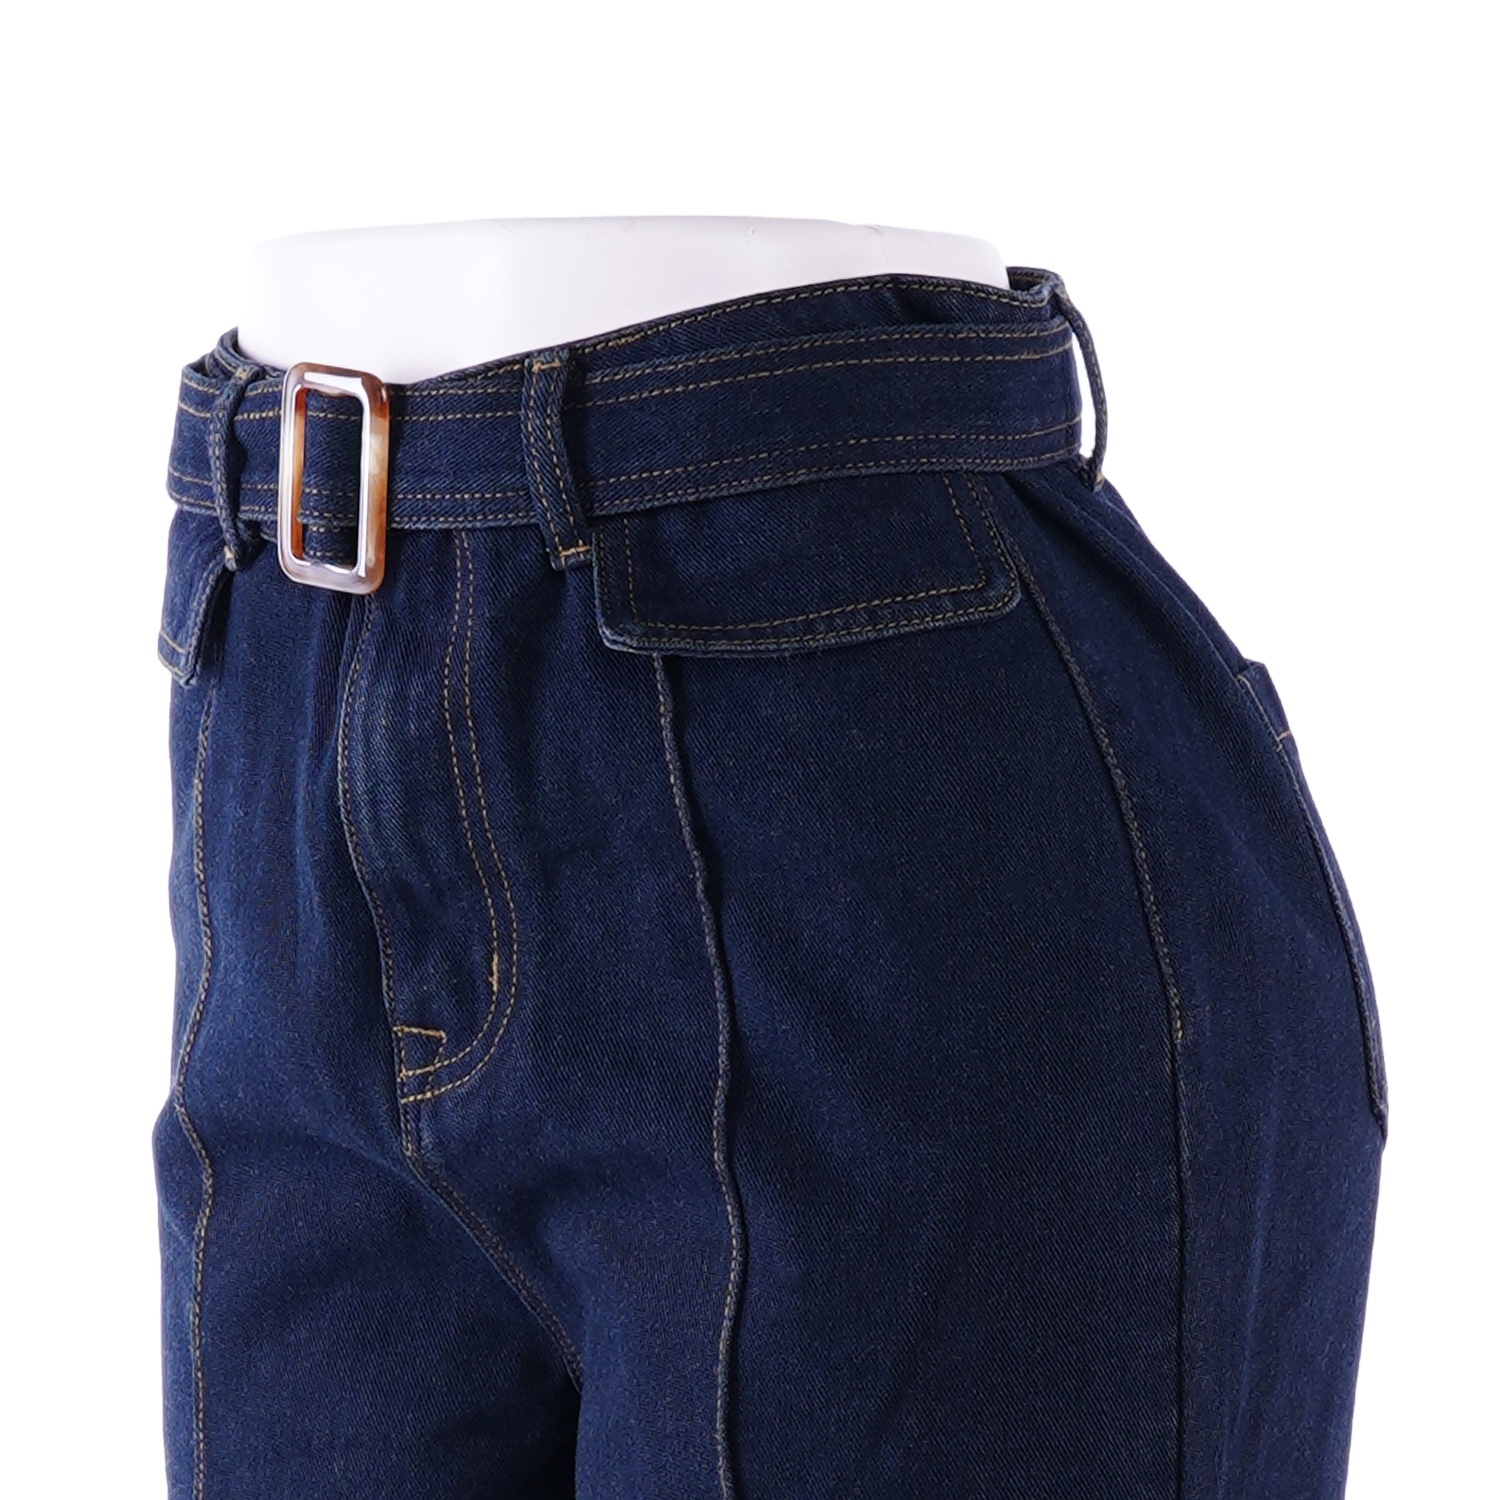 SKYKINGDOM wholesale price fashion women jeans denim blue low waist with belt cotton jeans women